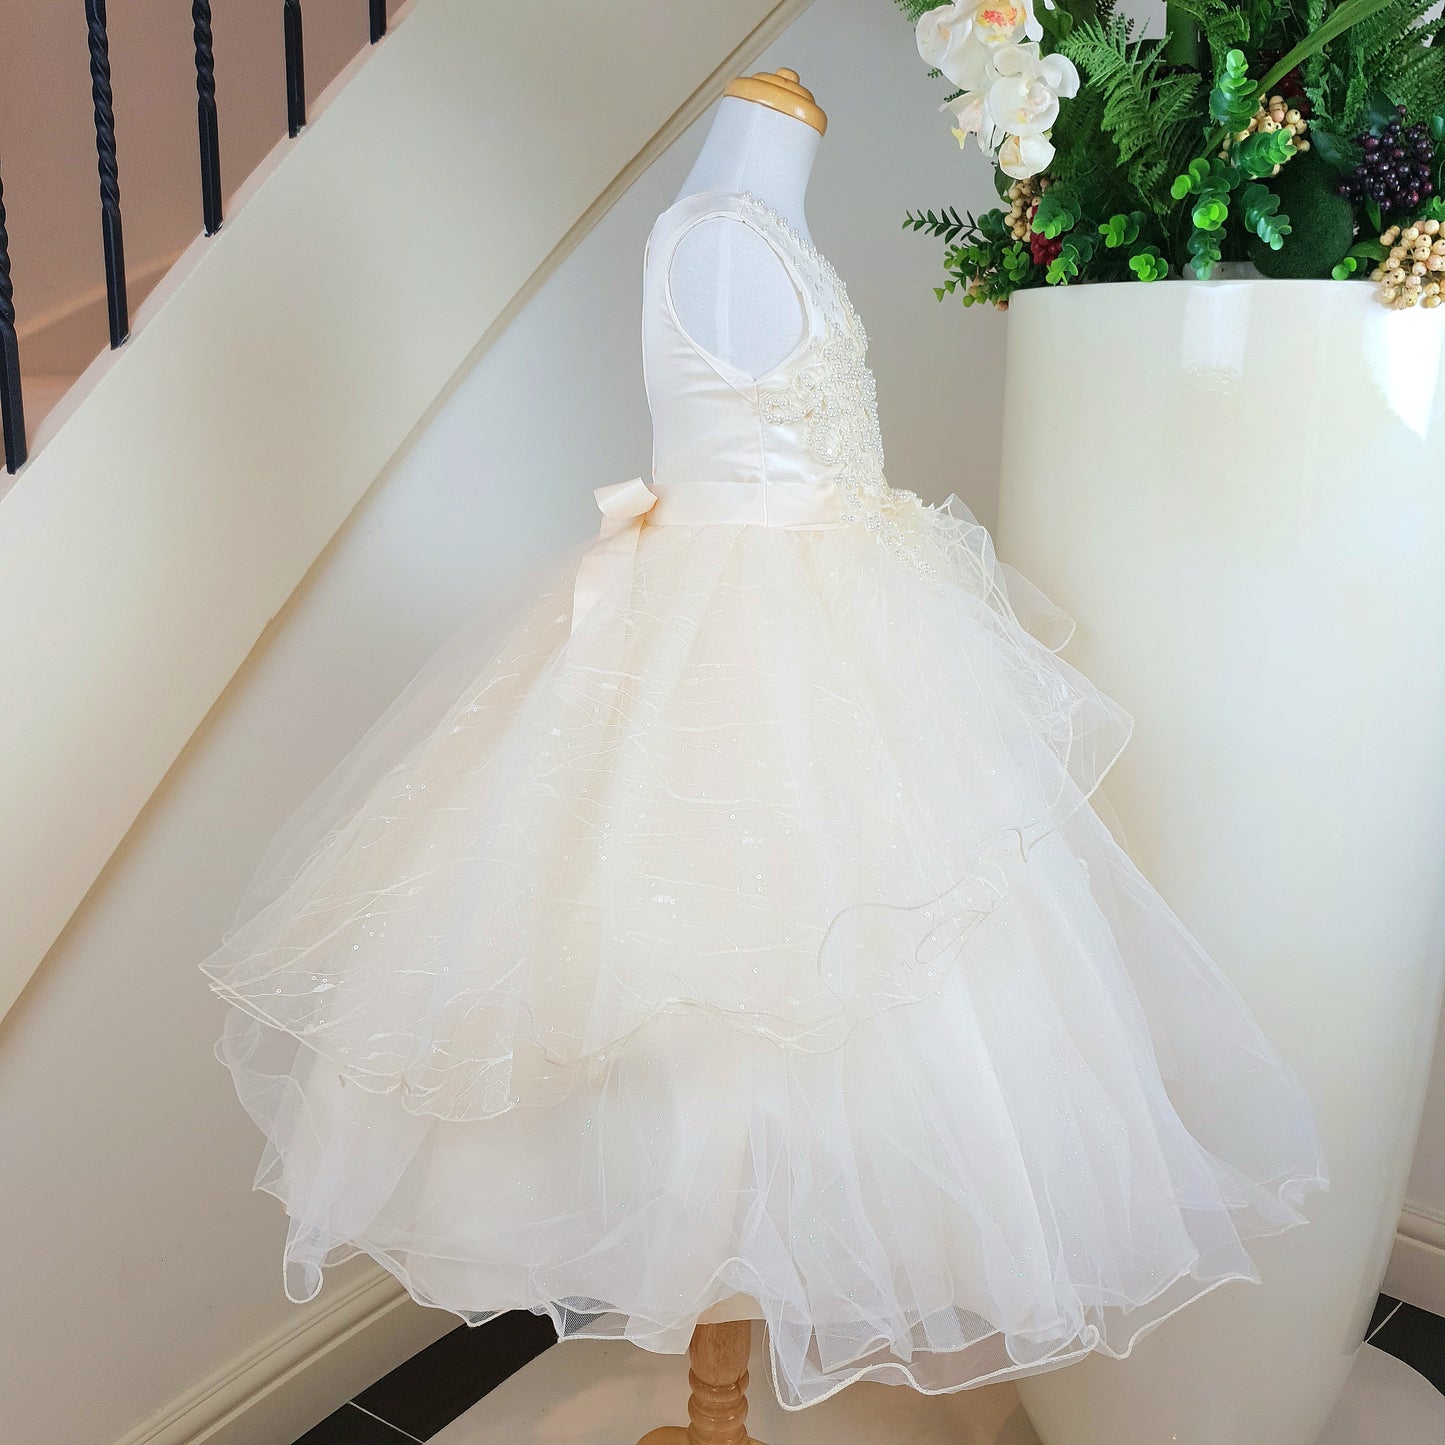 Elegant beaded bodice cream dress